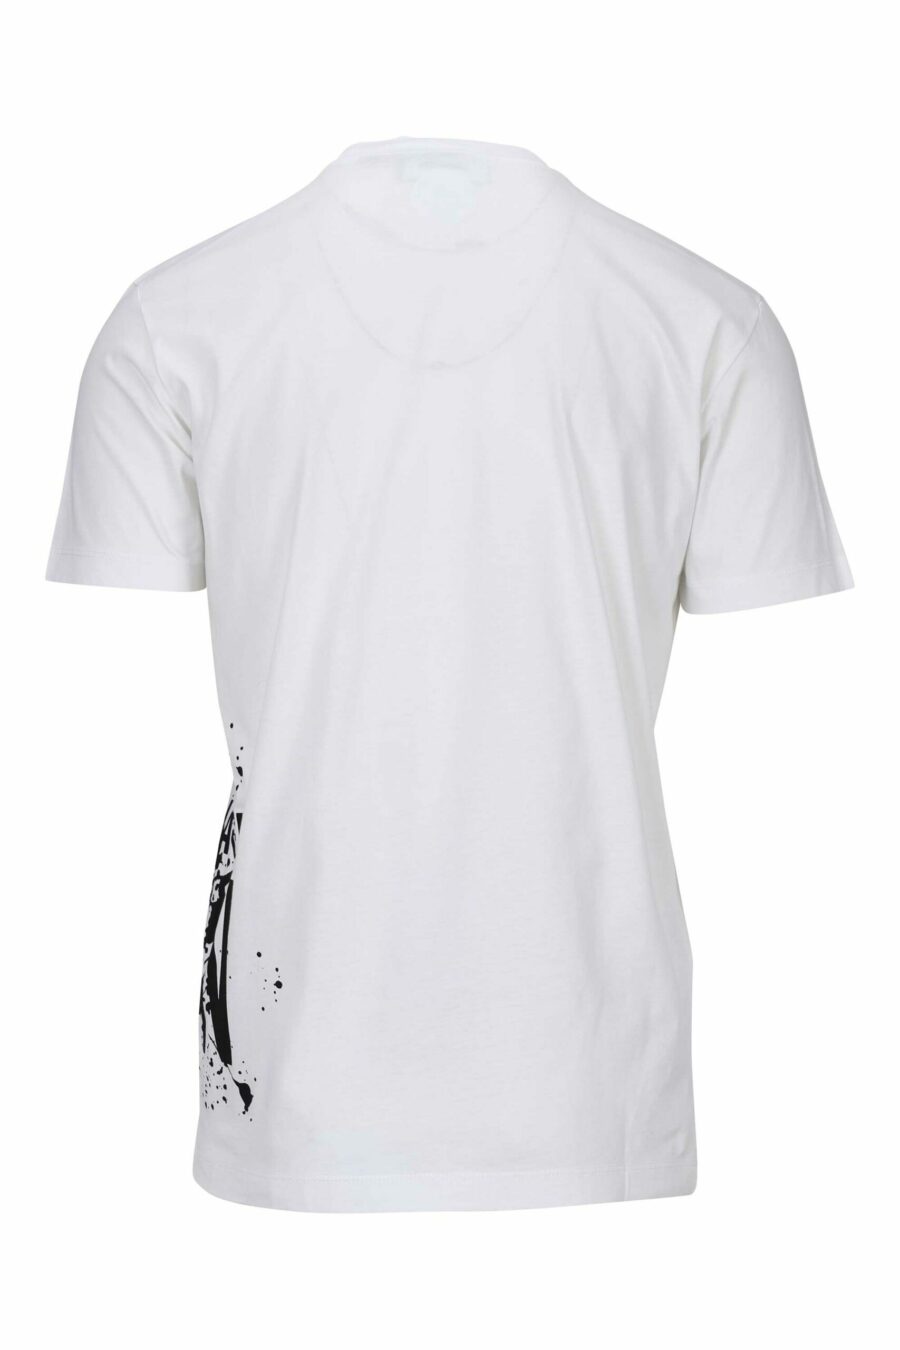 T-shirt blanc avec maxilogo "icon splash" en dessous - 8054148358549 1 scaled